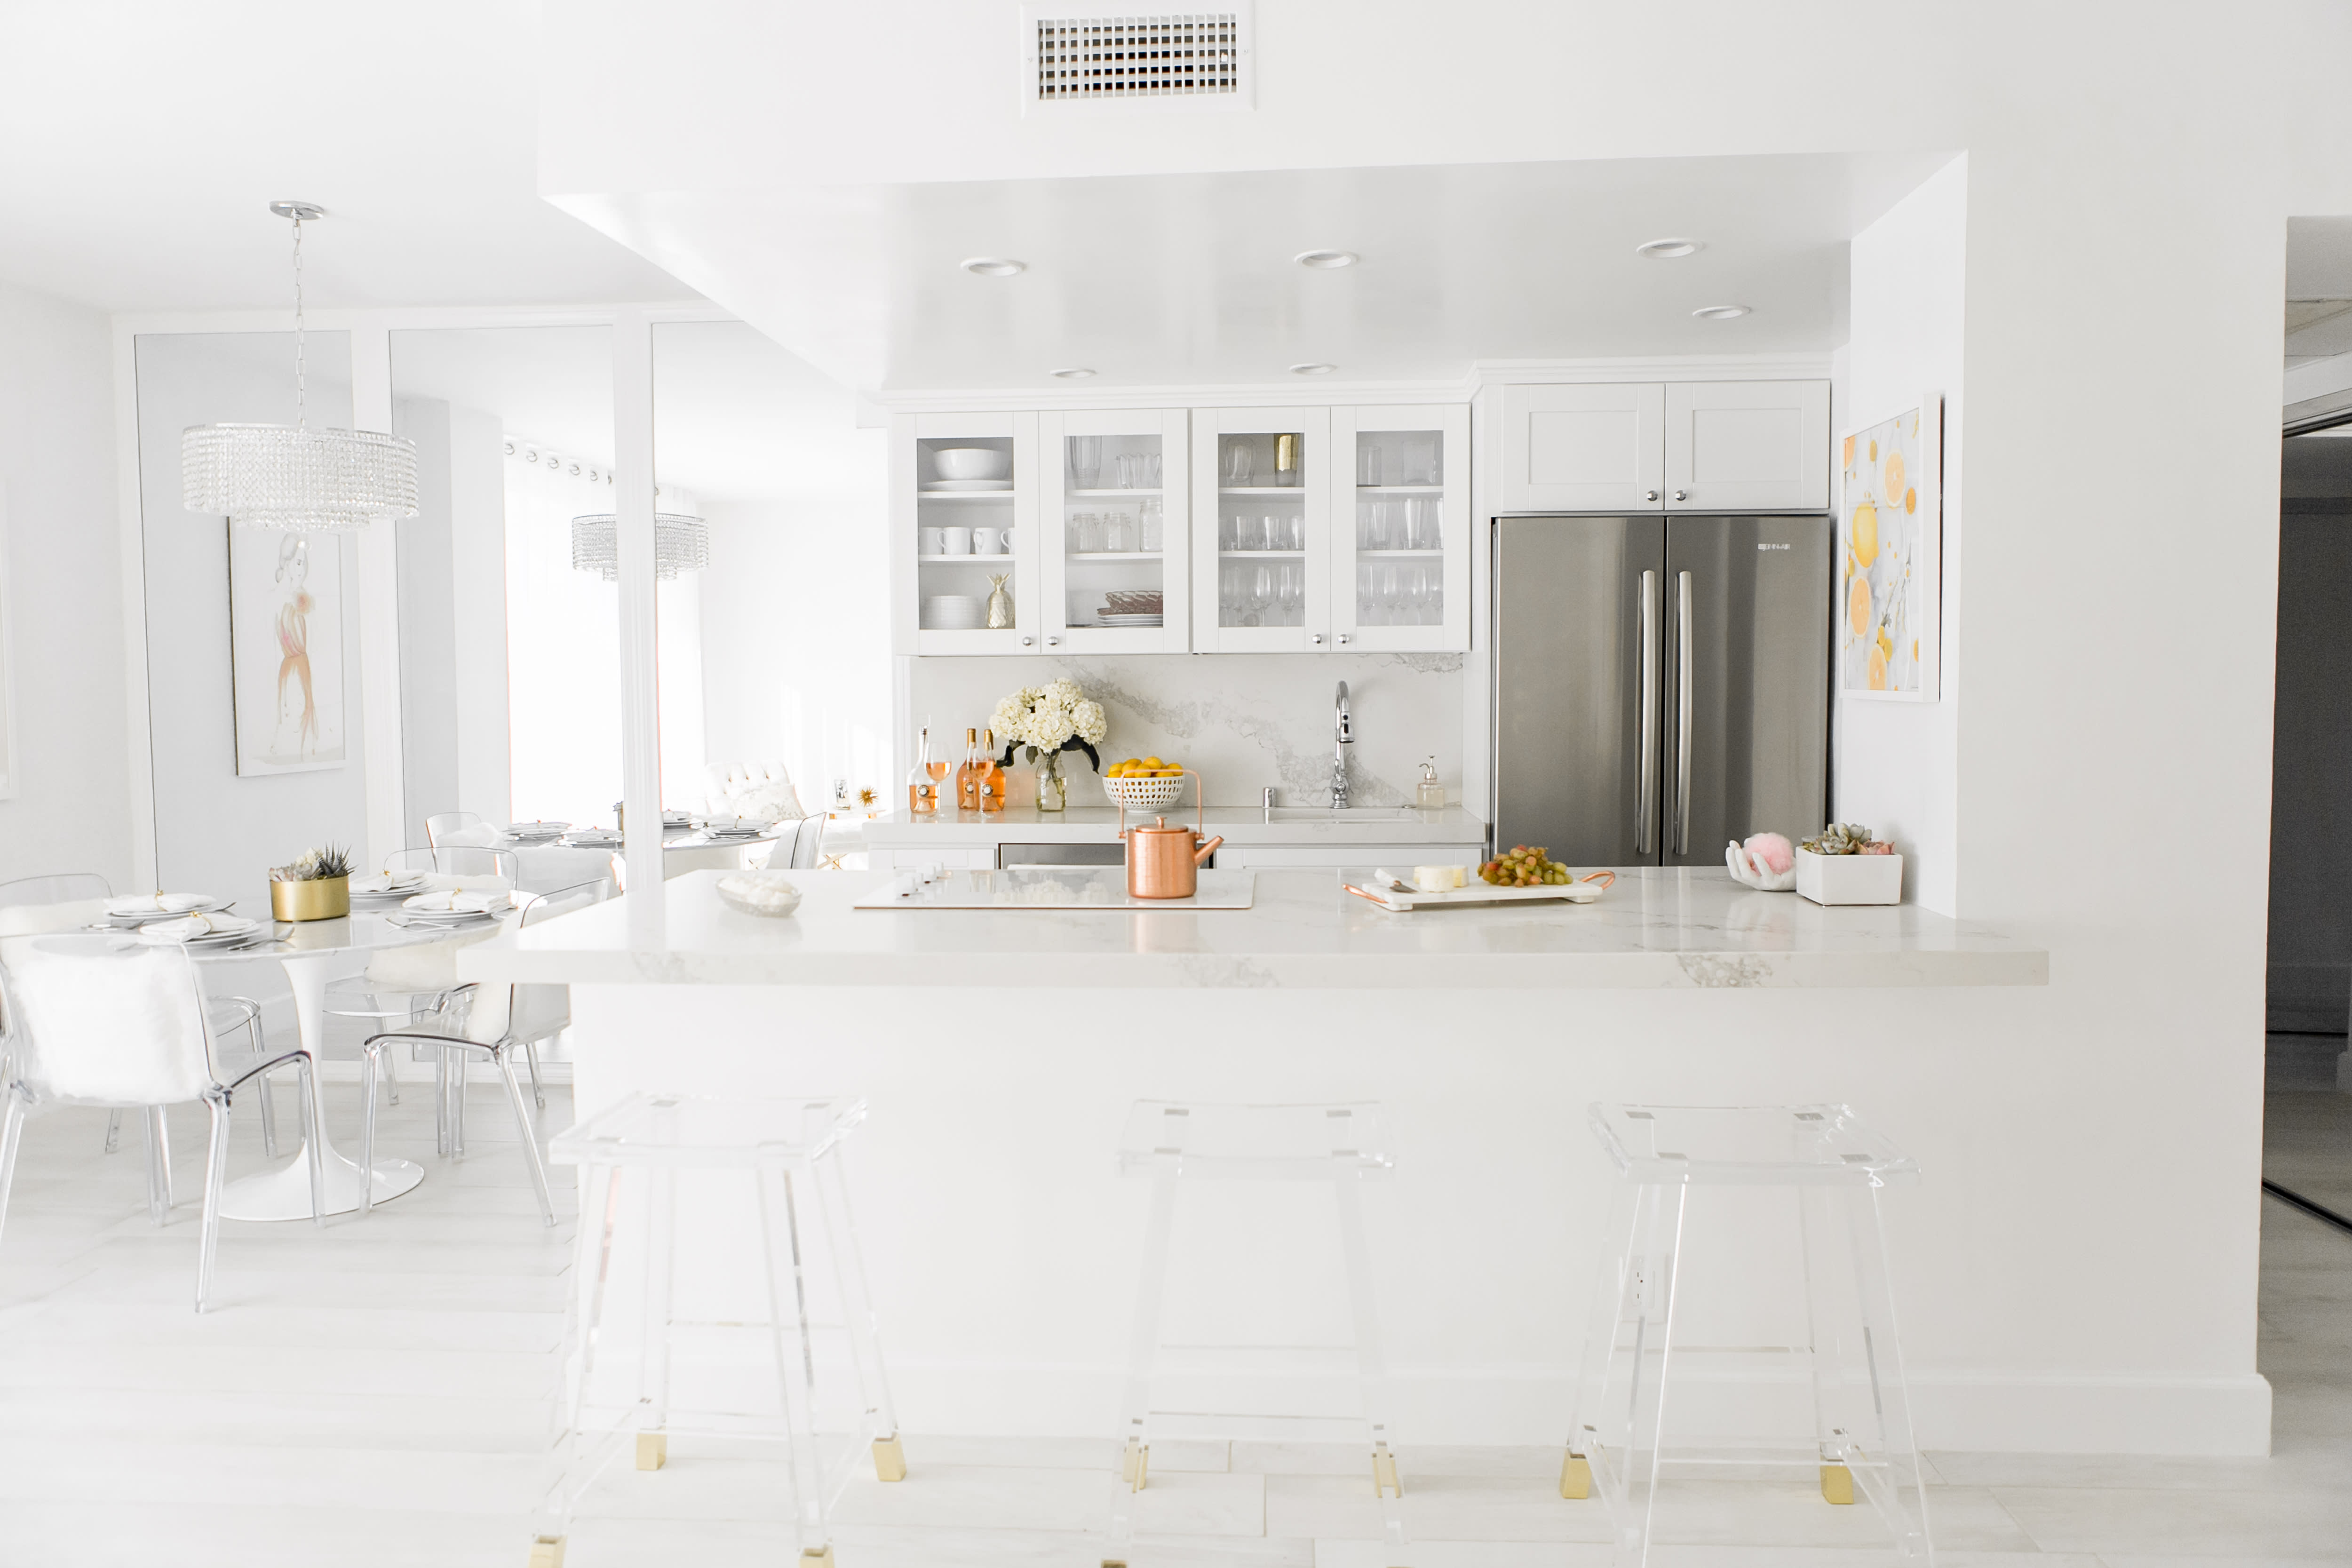 25 Beautiful White Kitchen Ideas Design Decorating Tips For White Kitchens Apartment Therapy